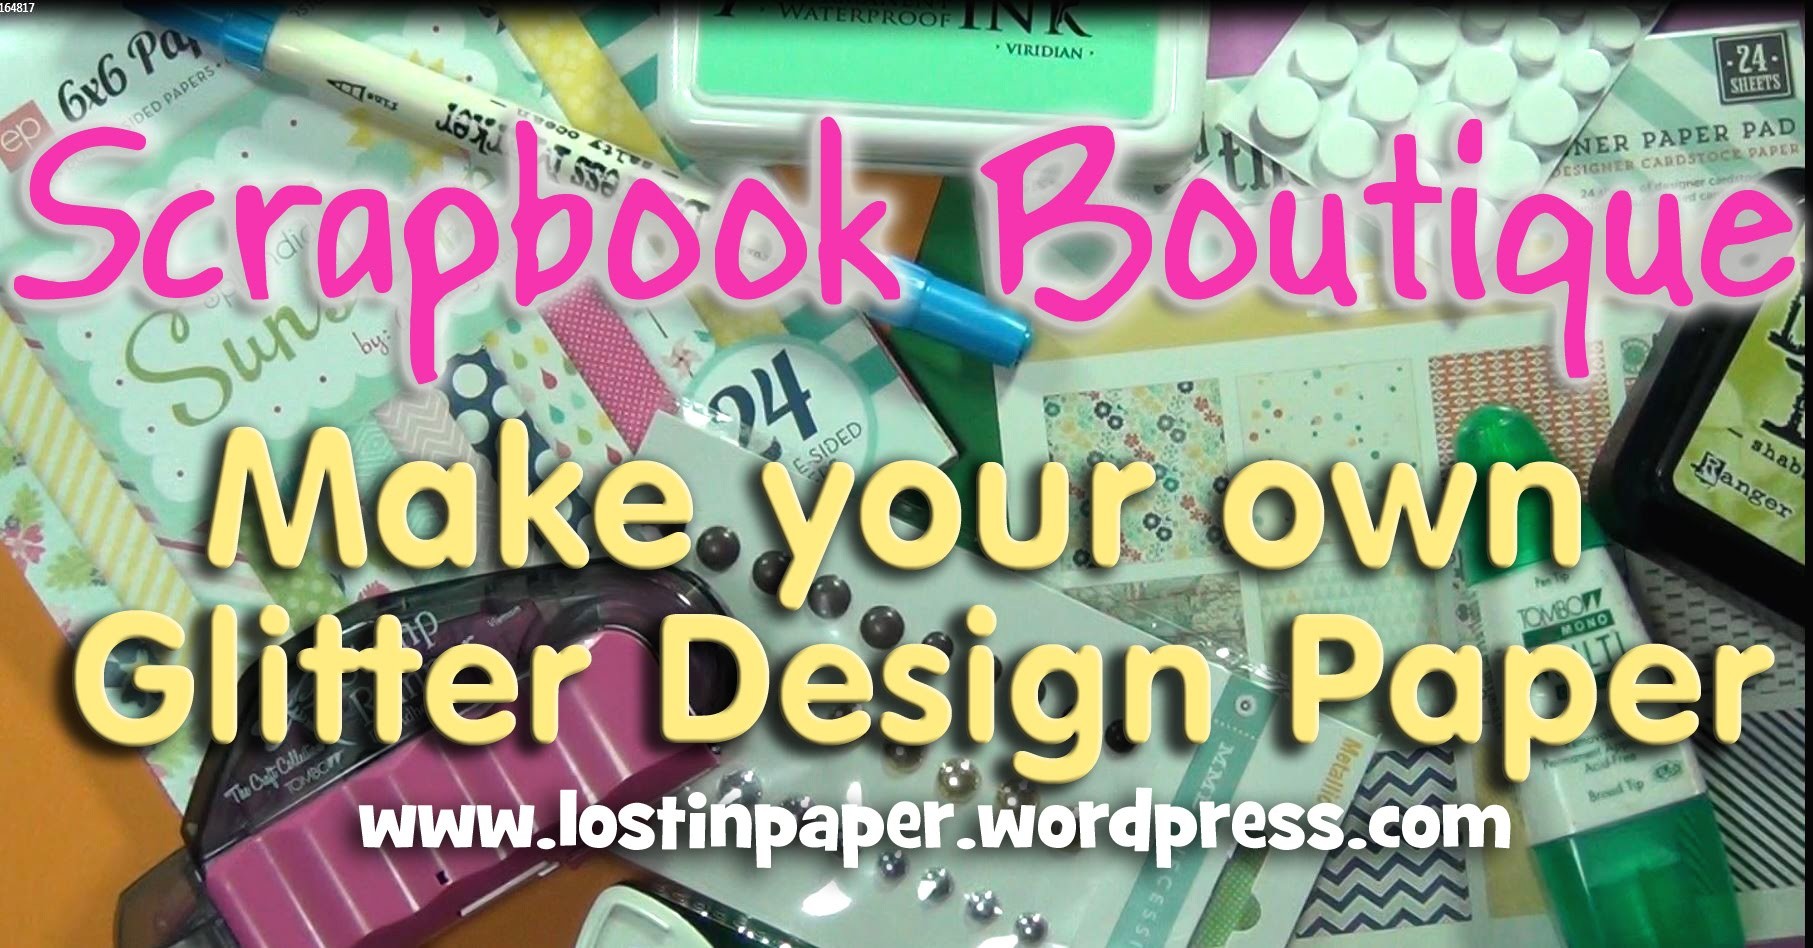 Make your own Glitter Design Paper at Scrapbook Boutique!